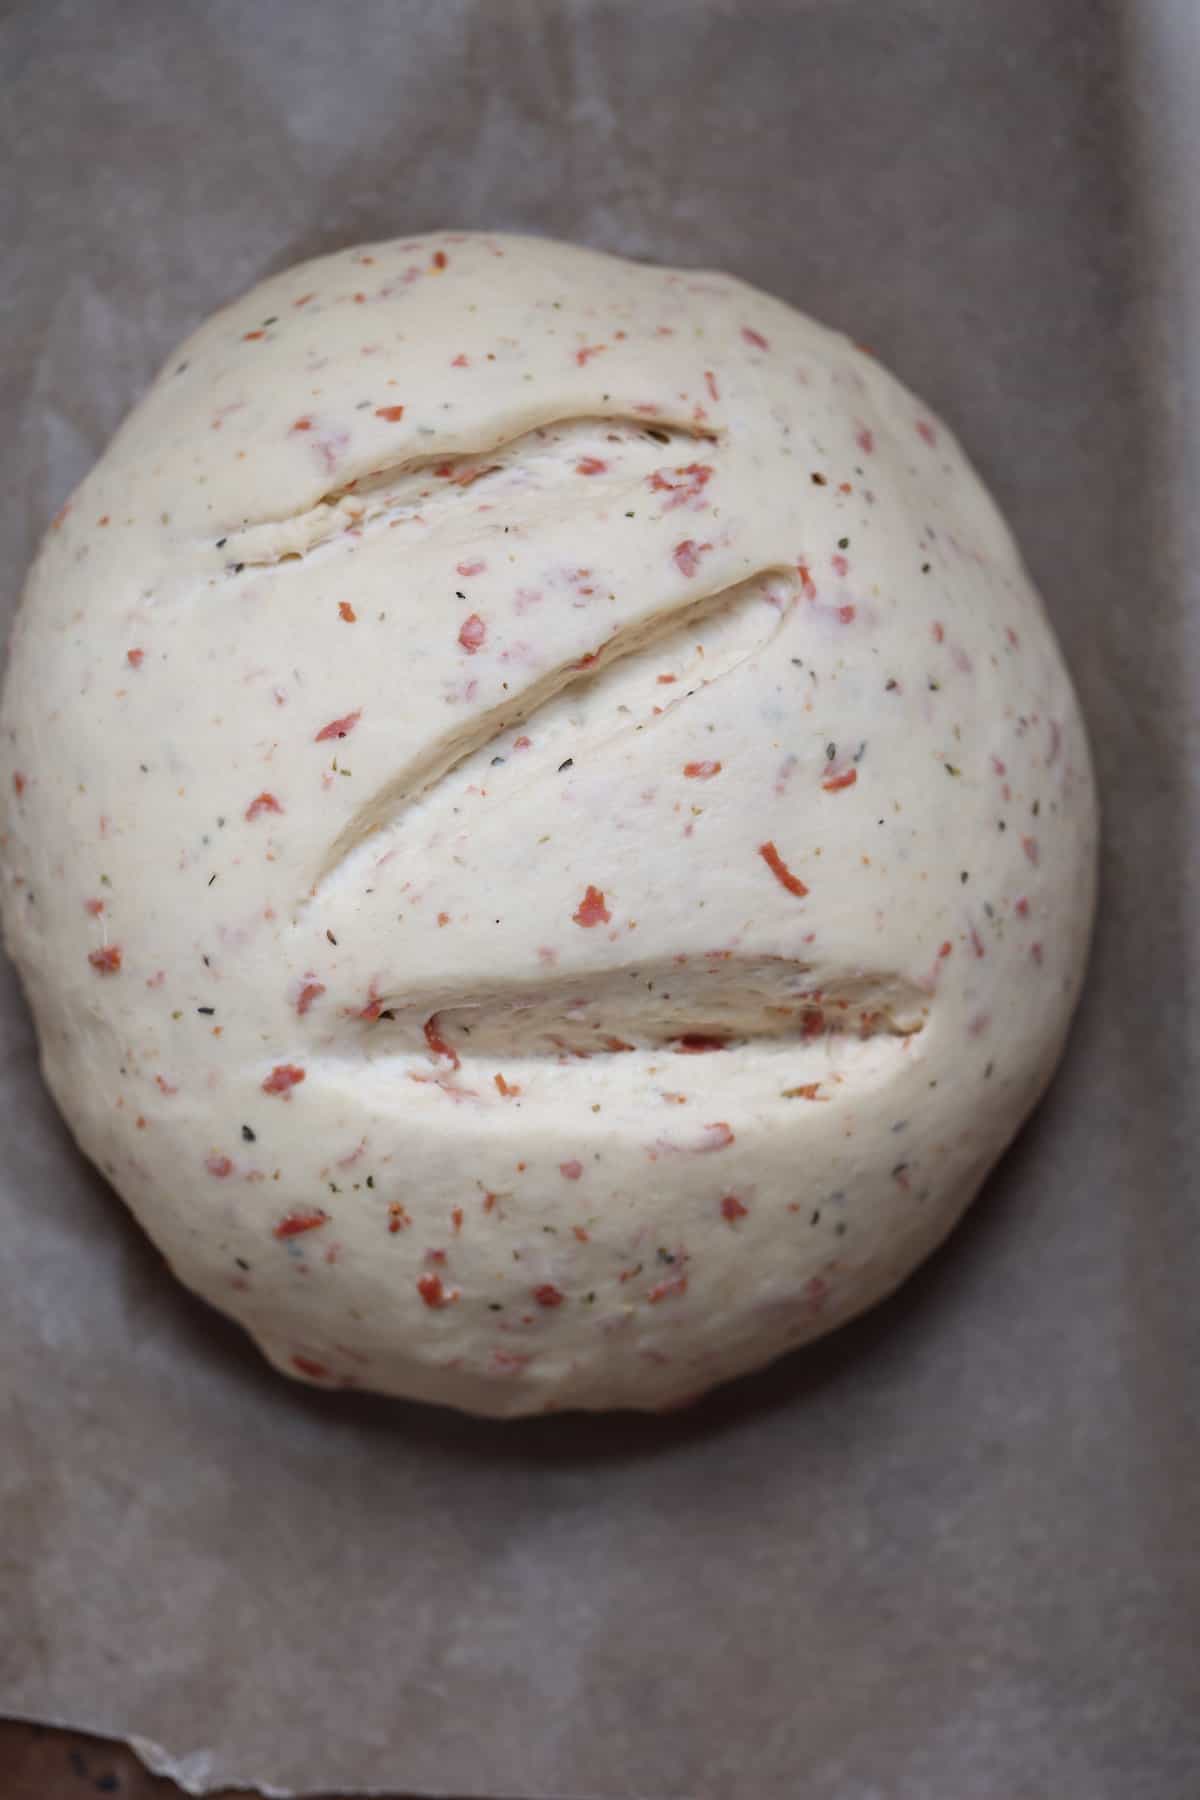 risen dough in a circle shape on a baking sheet